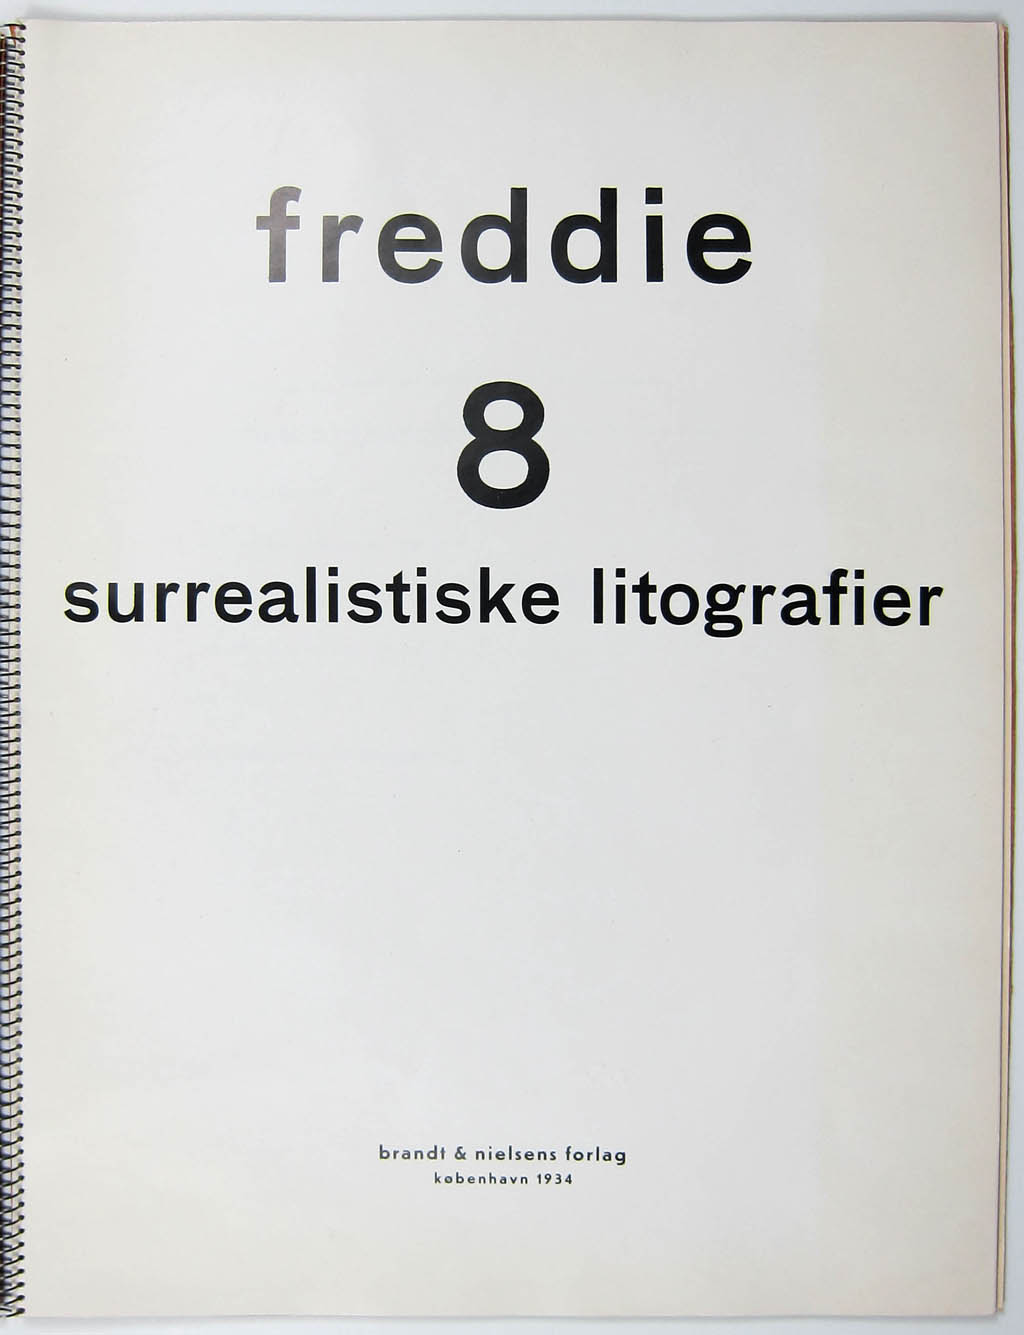 Wilhelm Freddie - 8 surrealistiske litografier - title page - 1934 bound portfolio of eight original lithographs with text